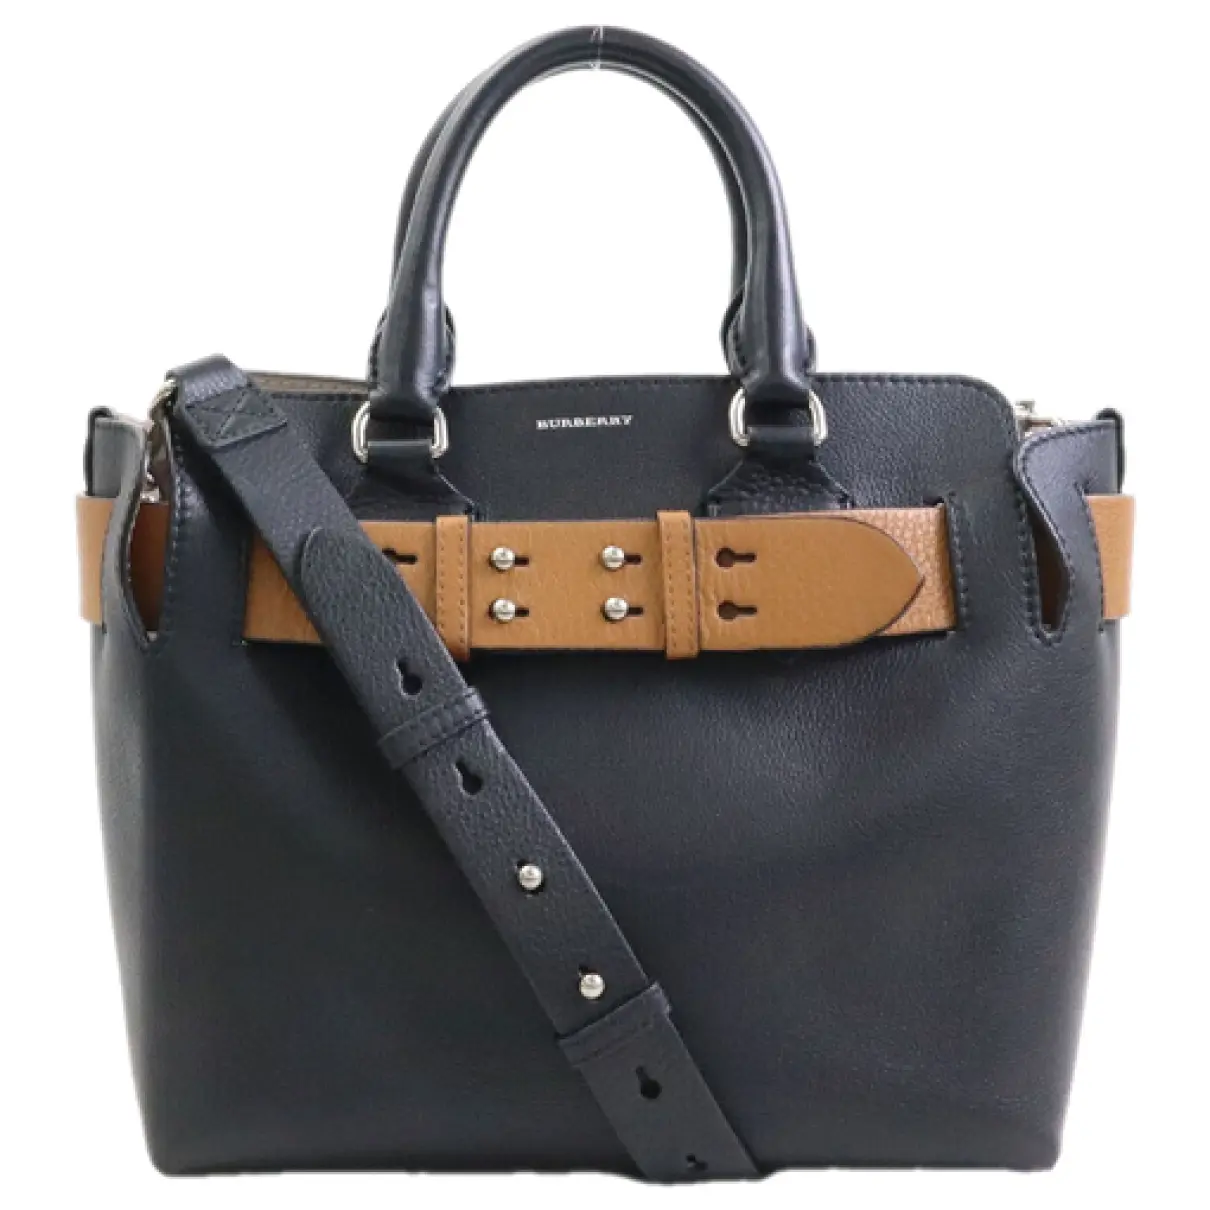 The Belt leather handbag